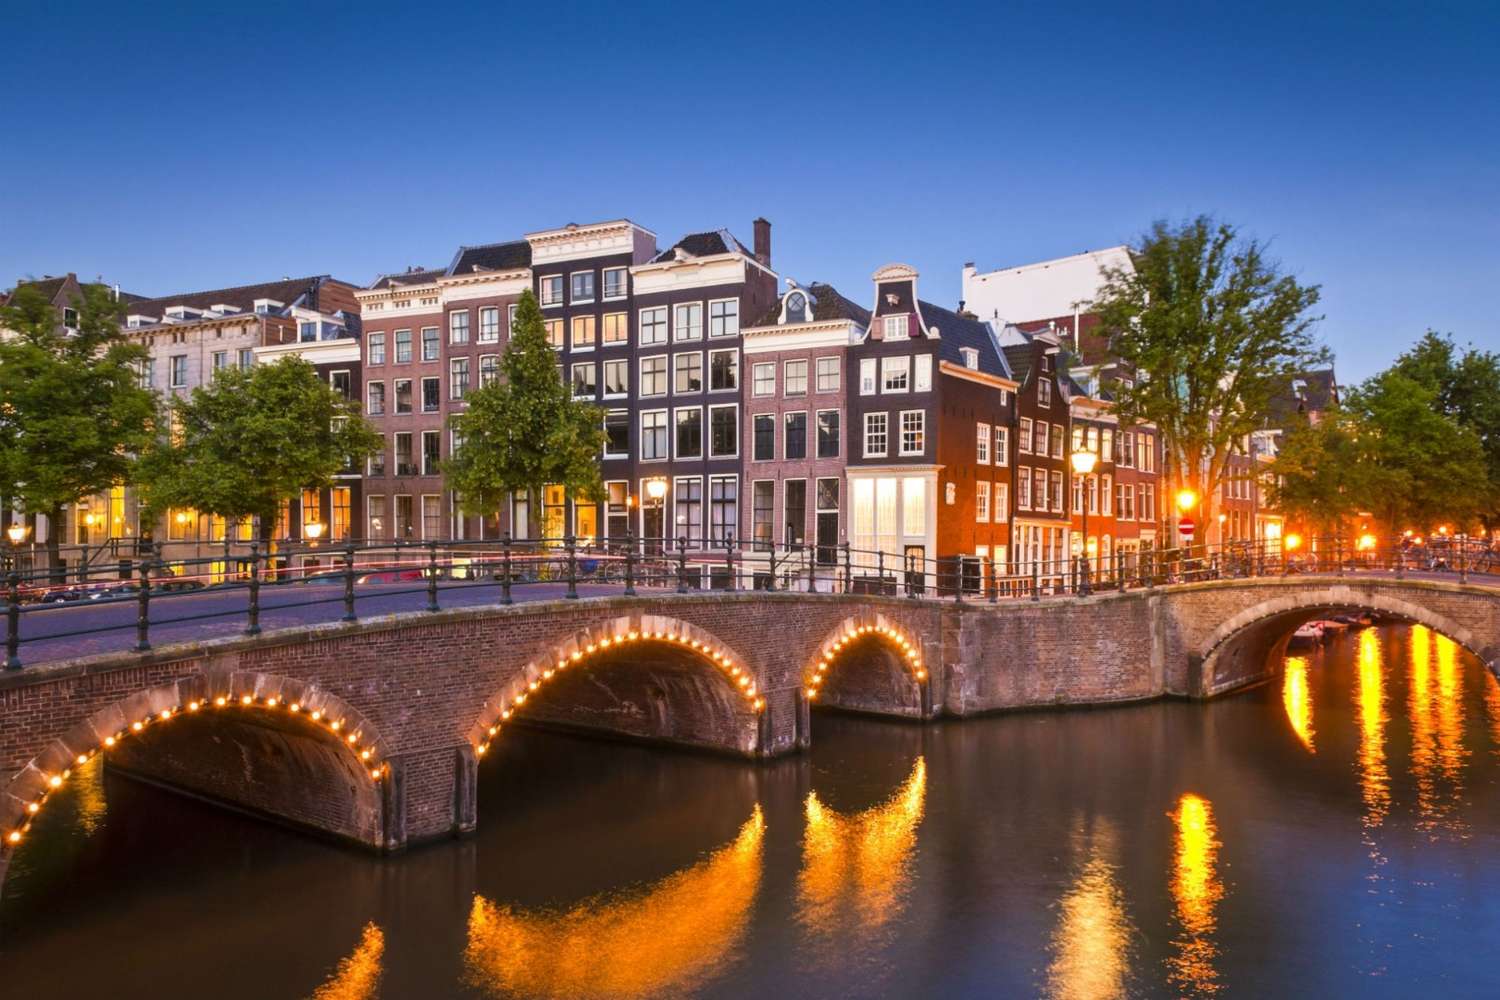 Holanda cambia de nombre a partir de 2020